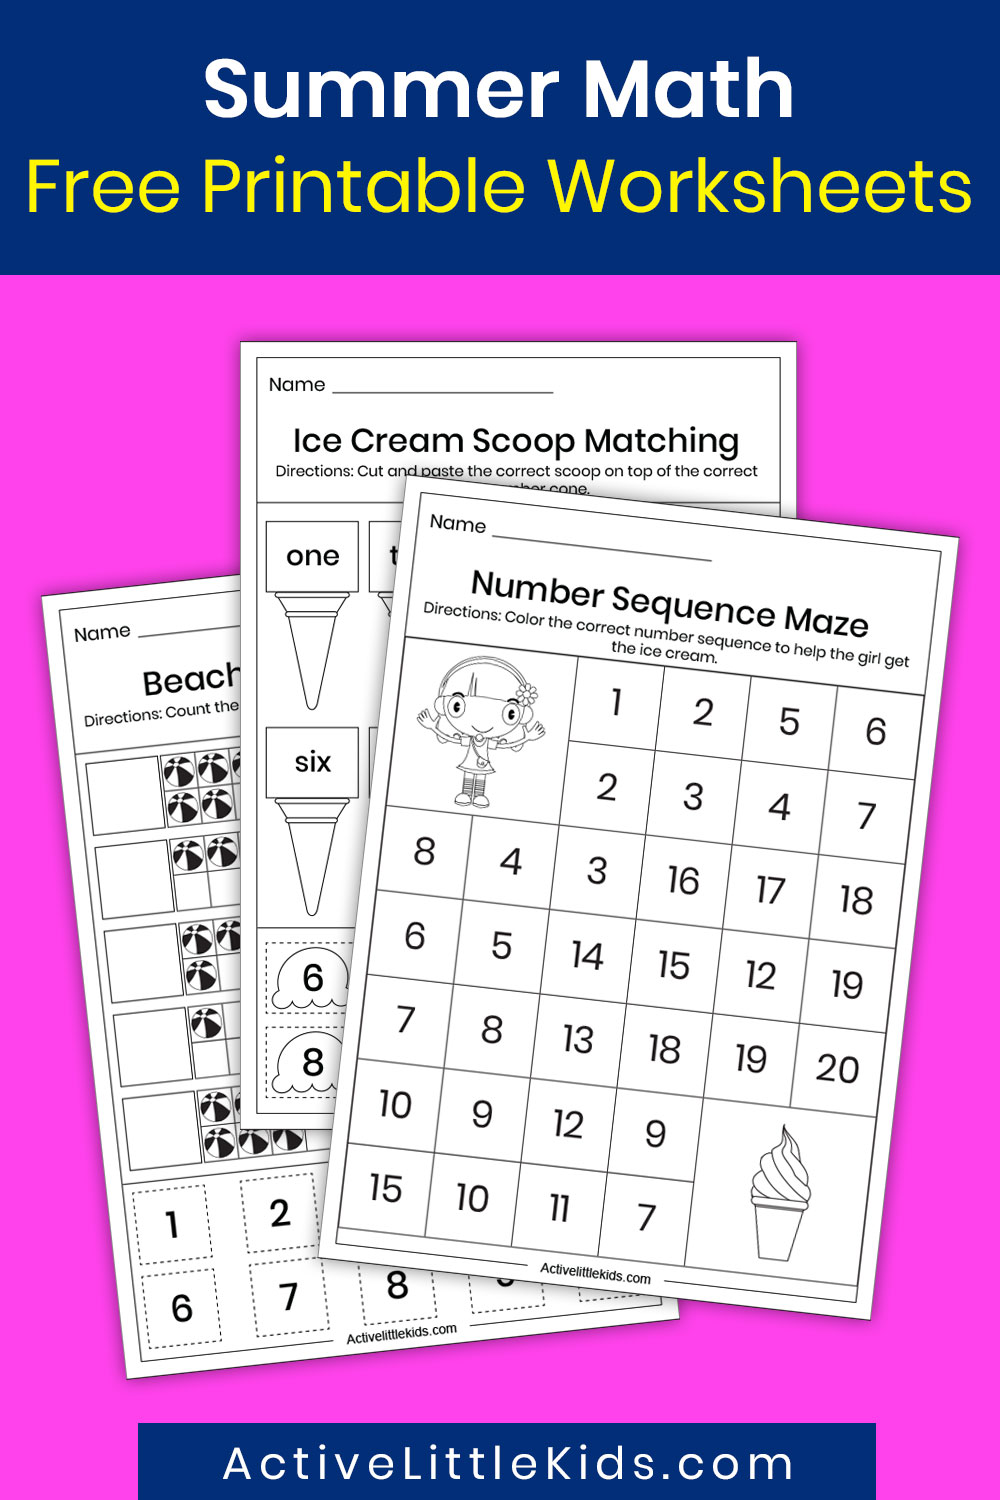 Free Summer math worksheets - Active Little Kids